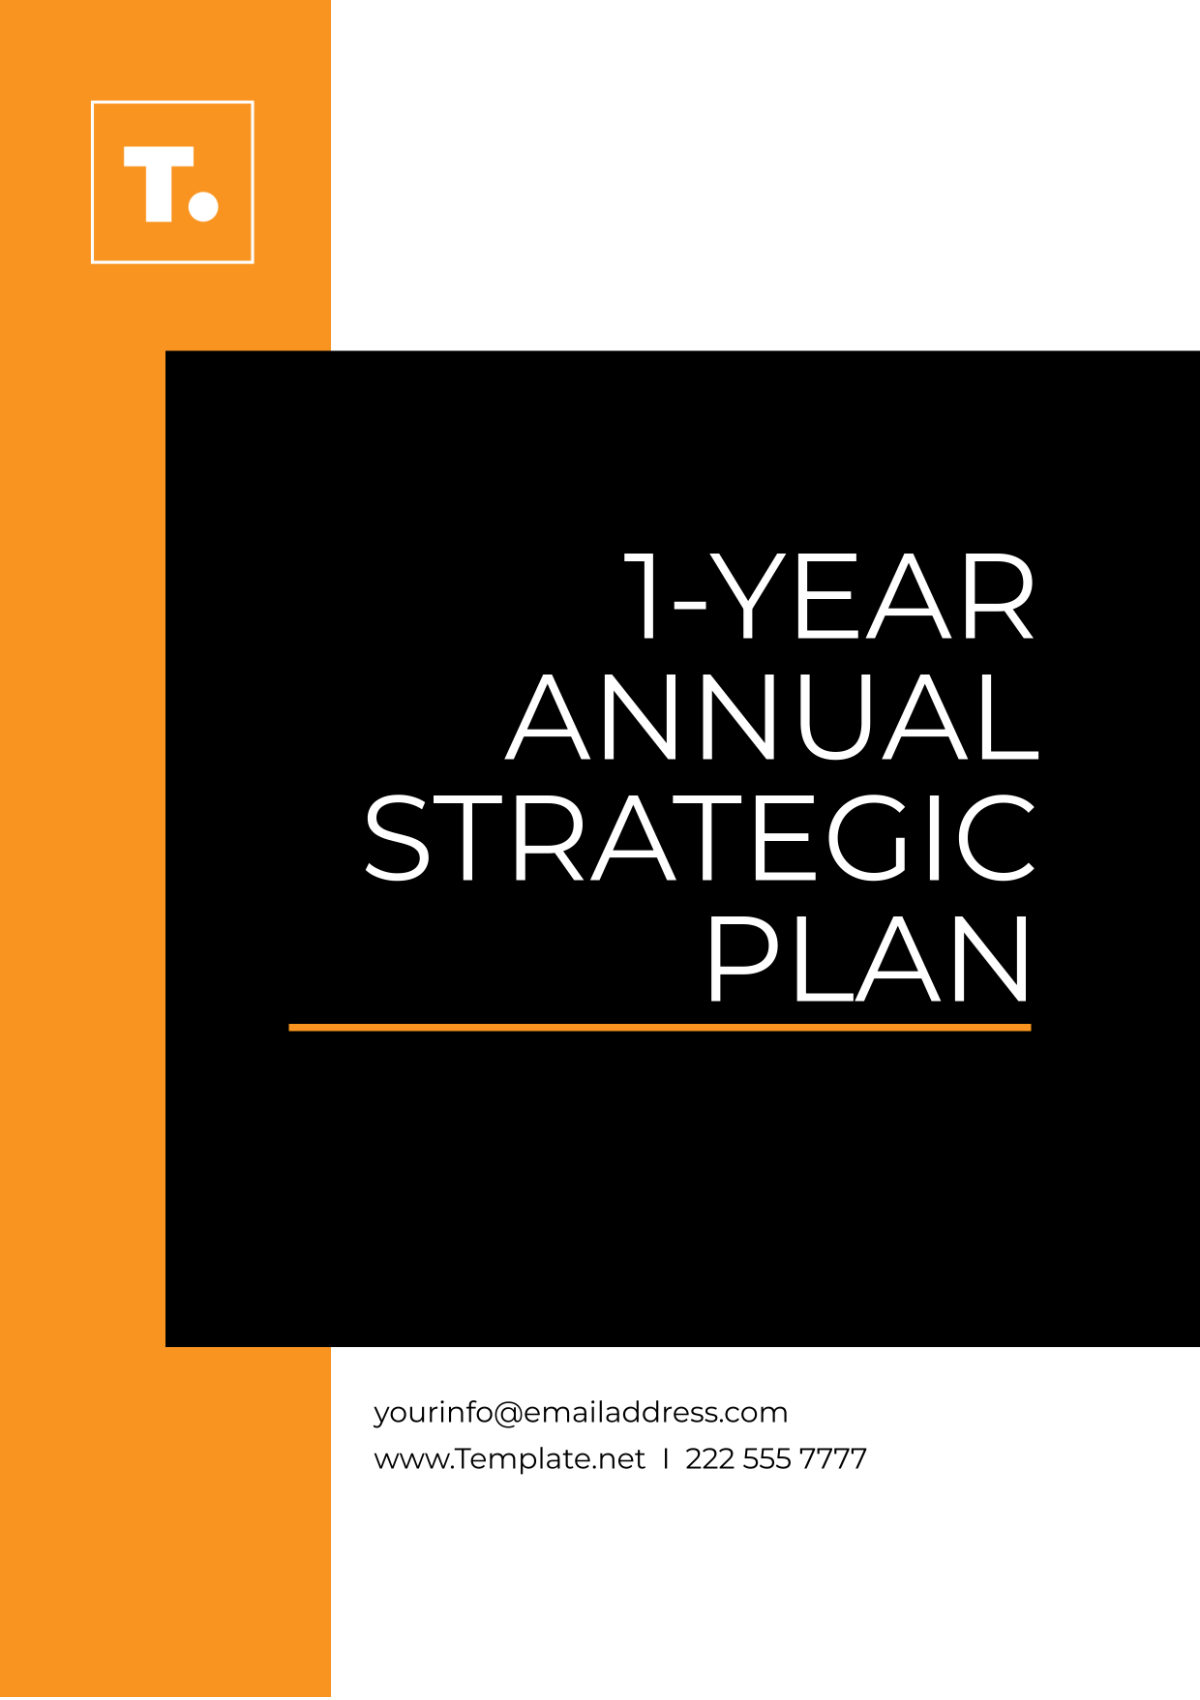 Free 1 Year Annual Strategic Plan Template